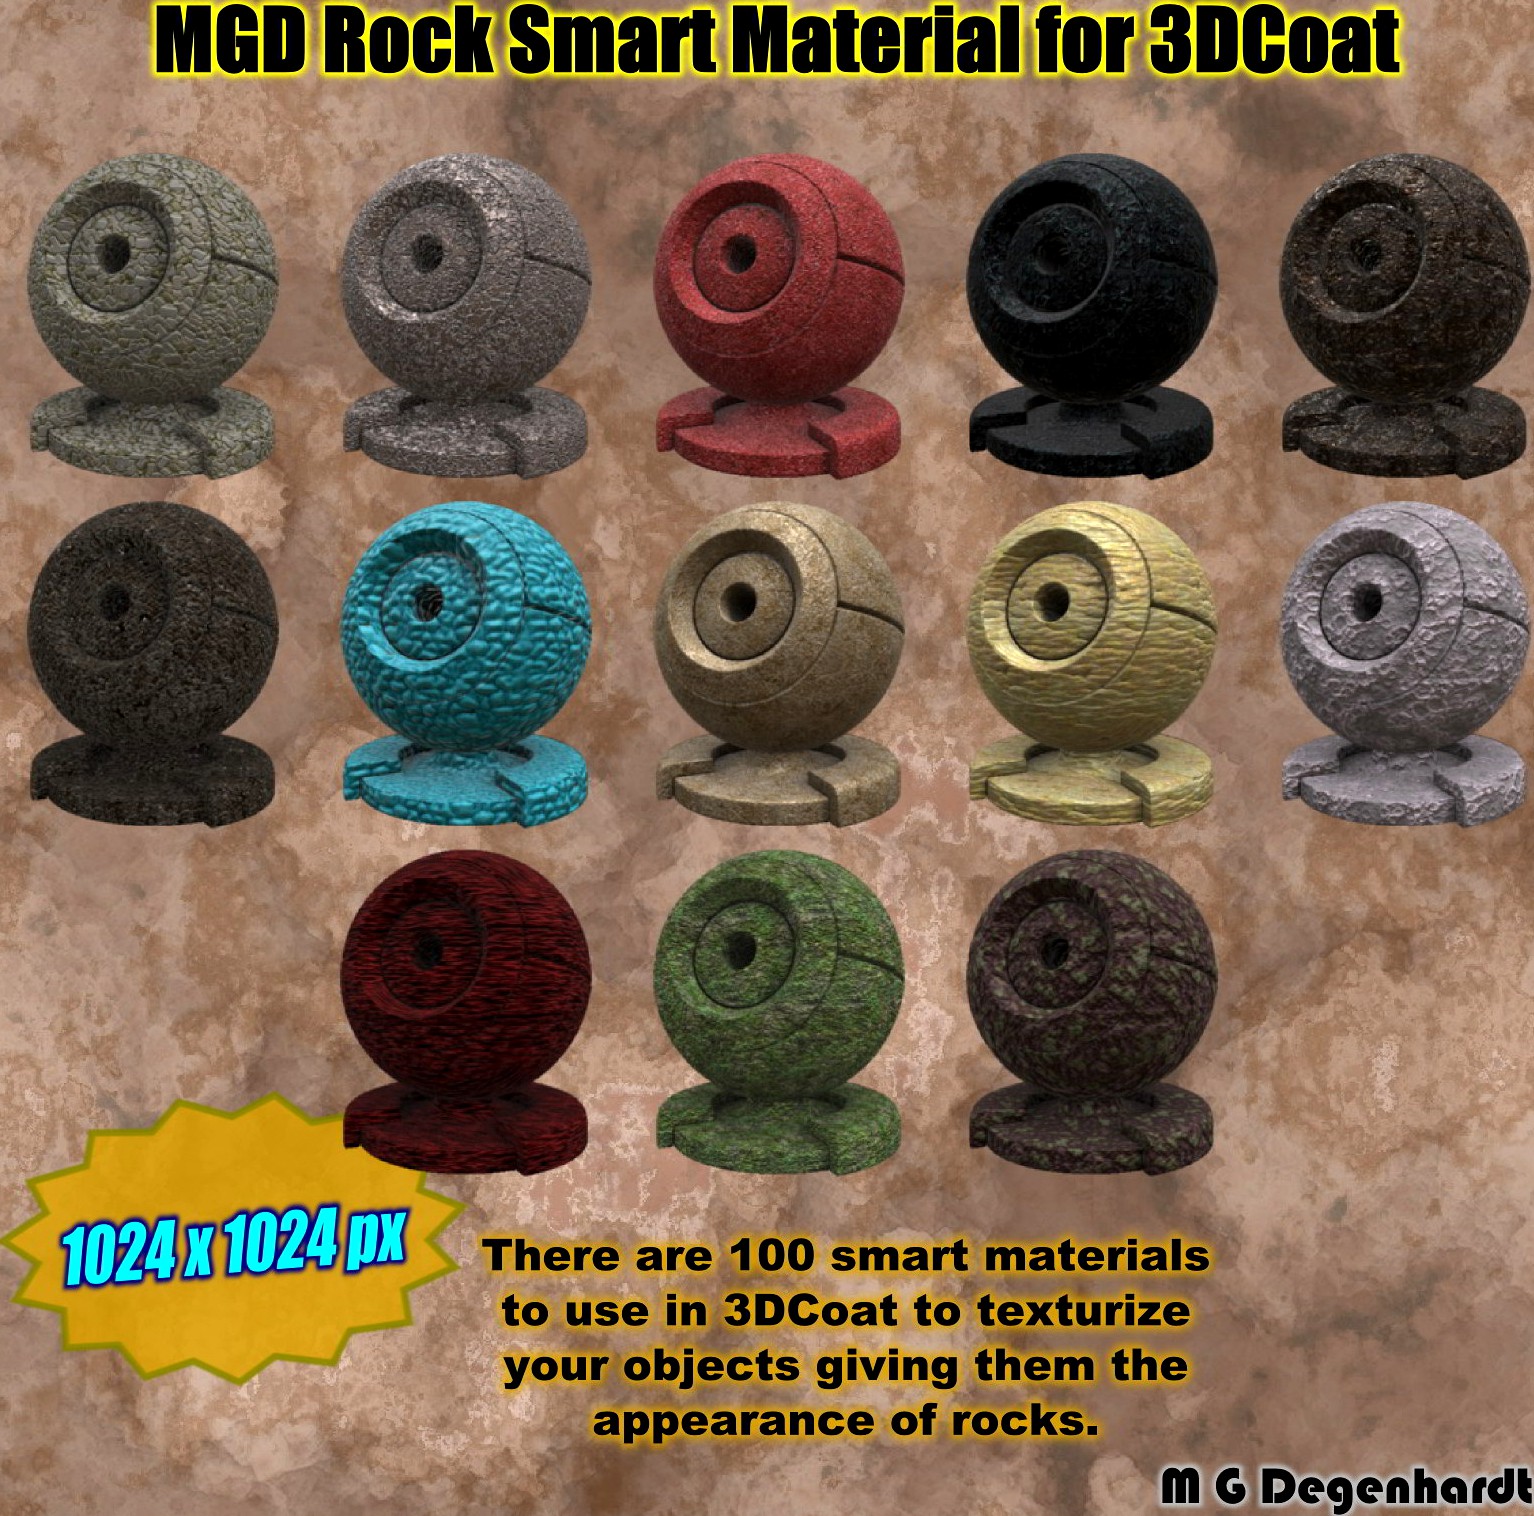 MGD Rock Smart Materials for 3DCoat